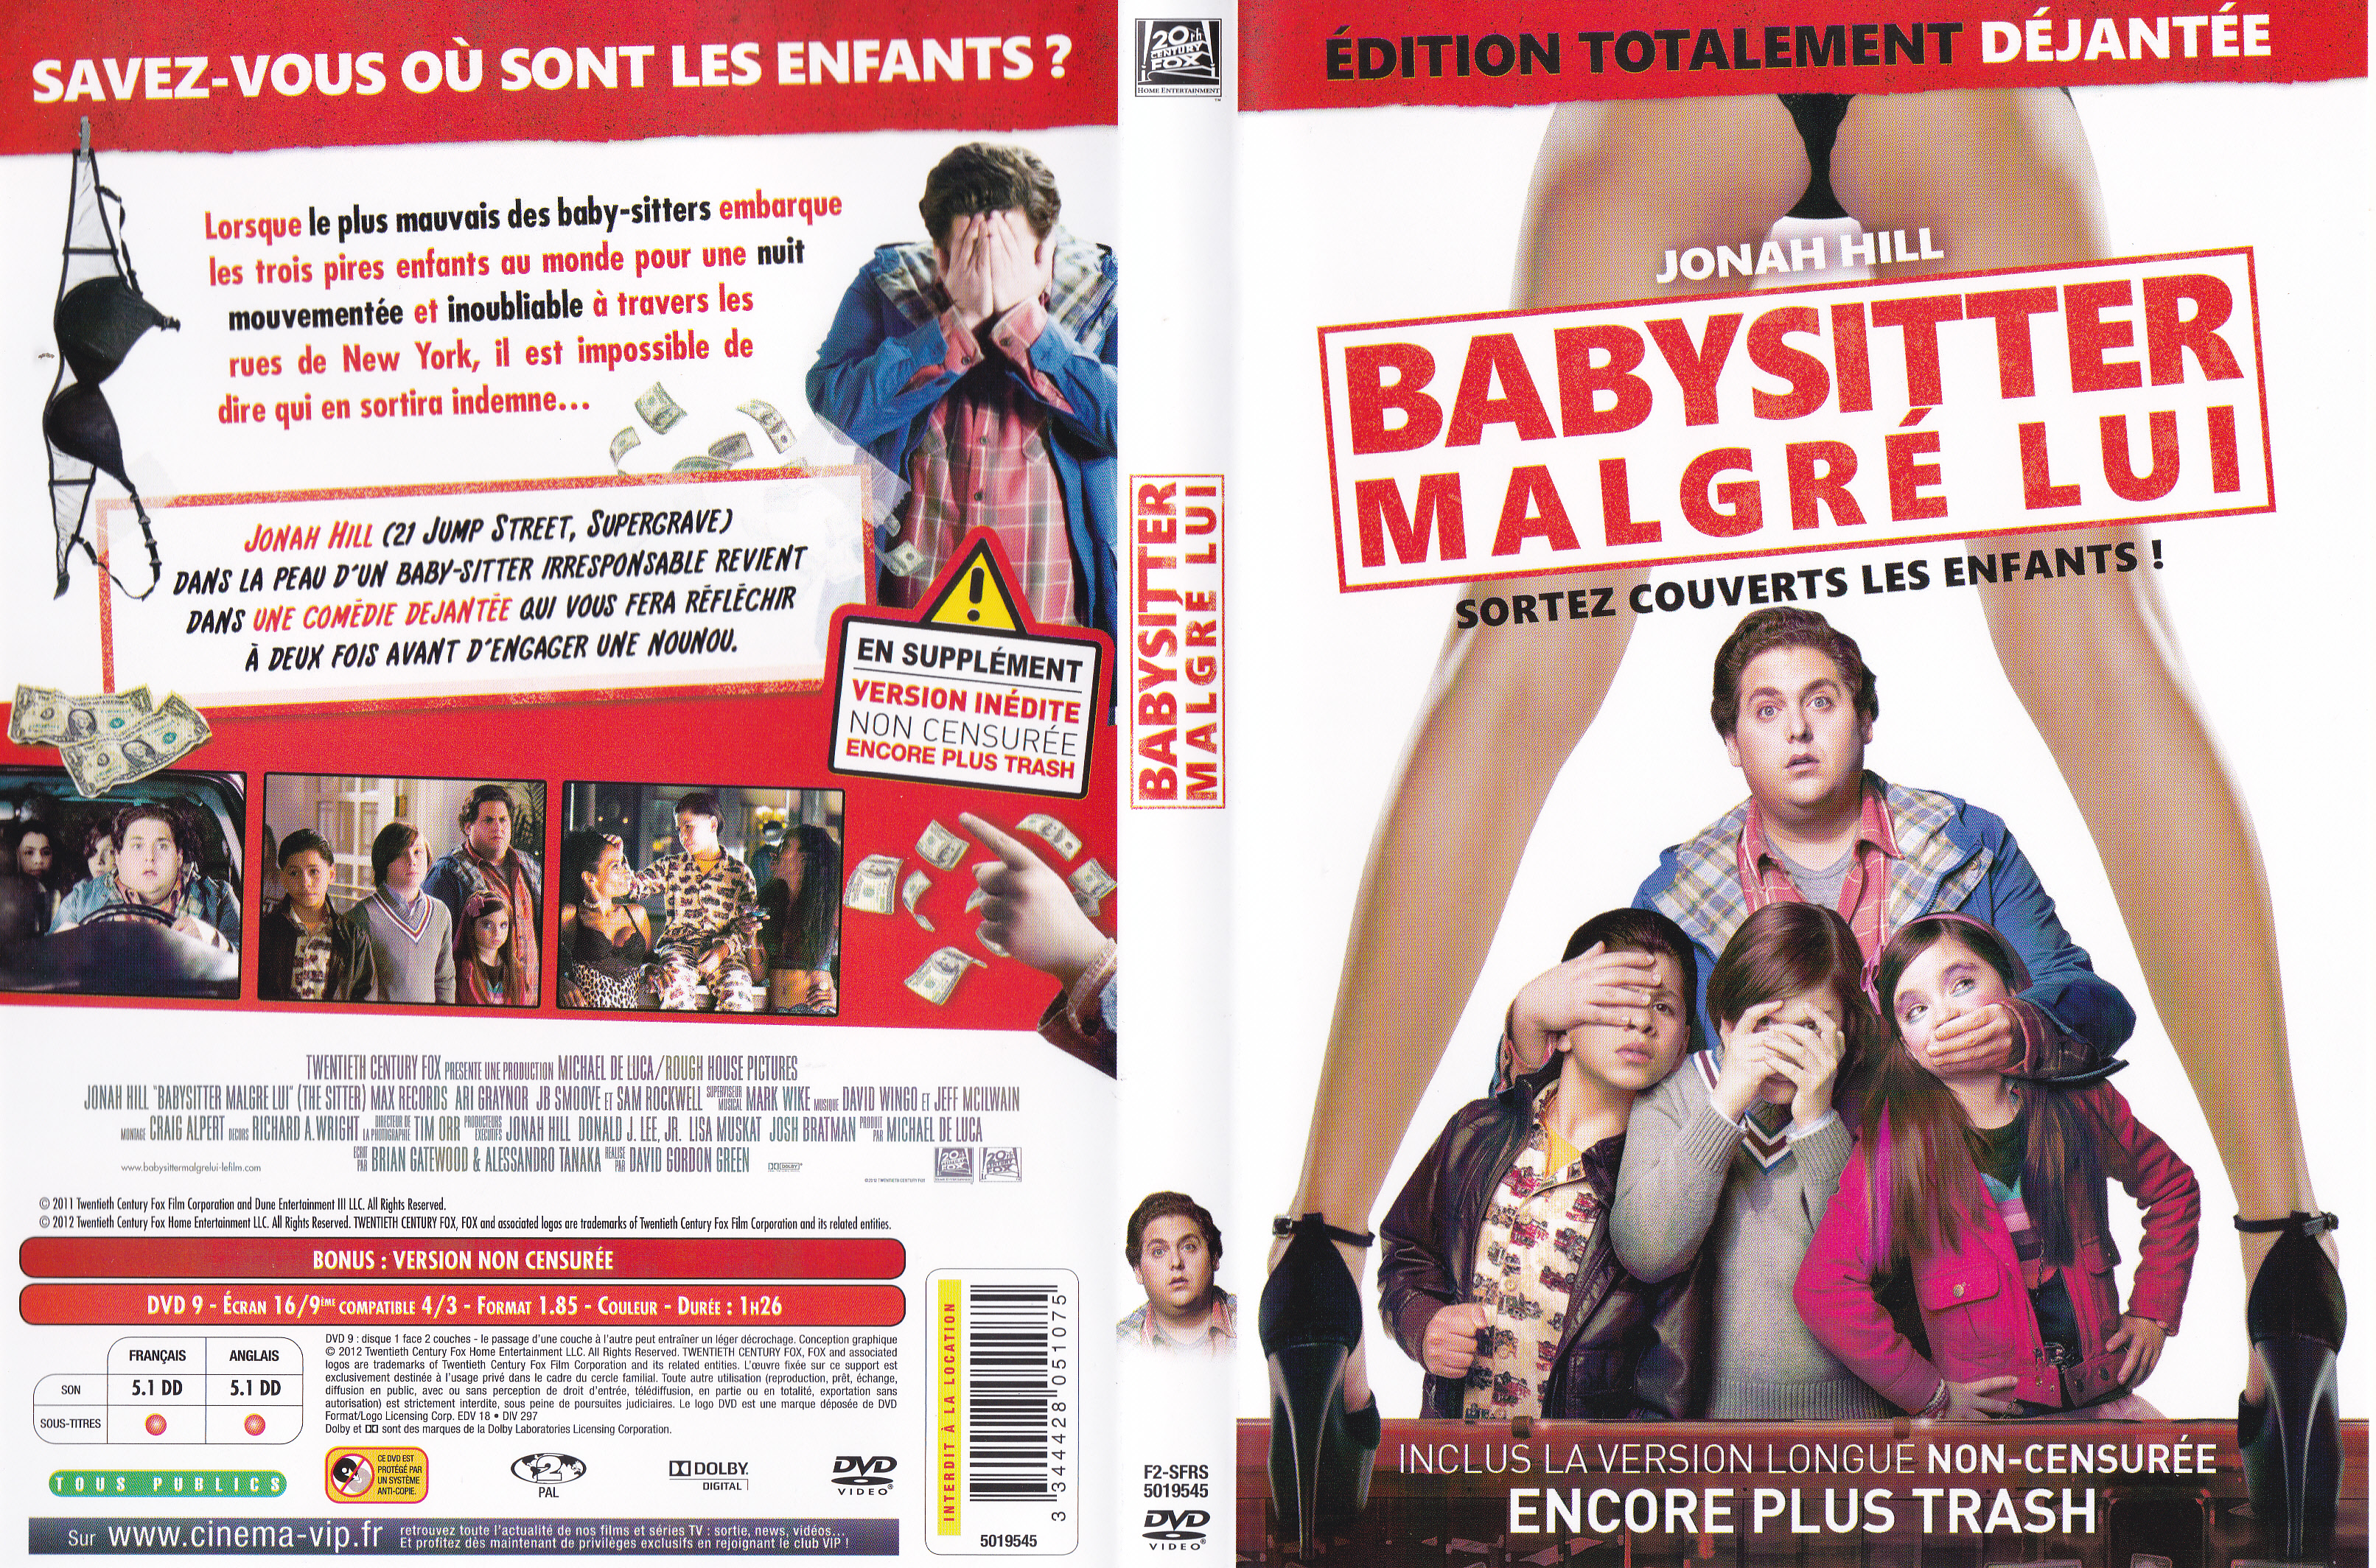 Jaquette DVD Baby-Sitter malgr lui